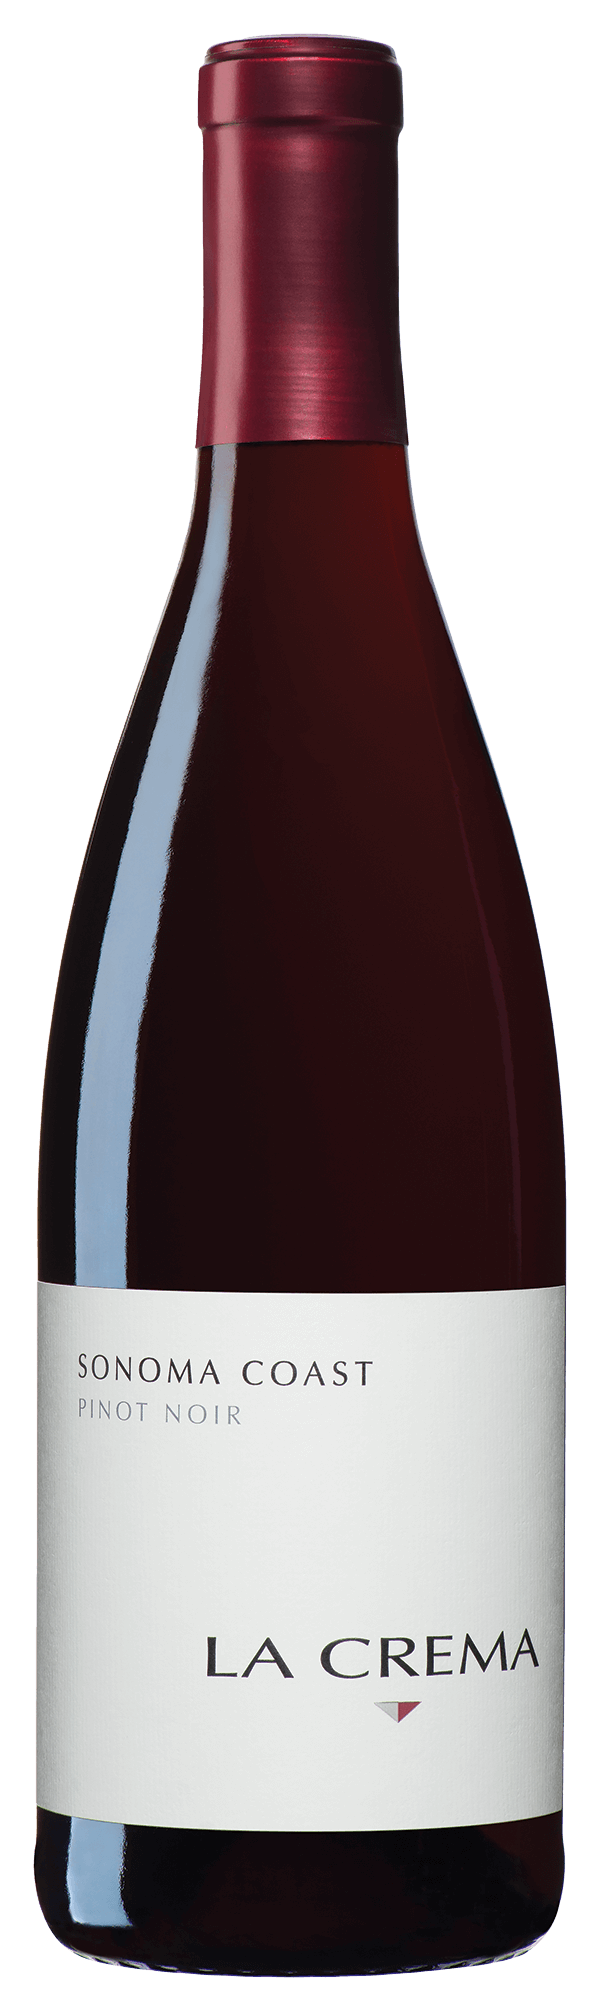 Sonoma Coast Pinot Noir | La Crema Winery